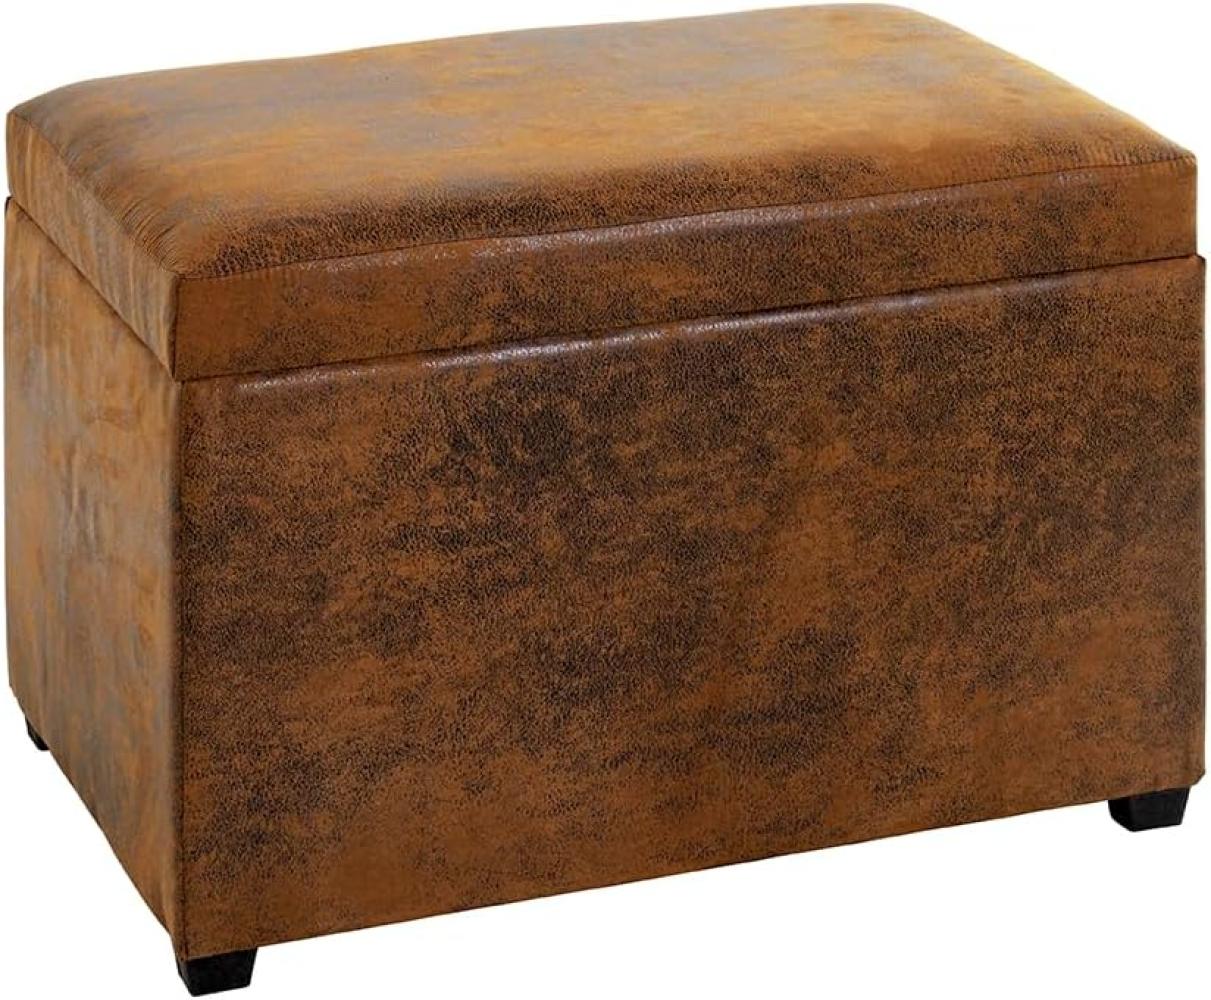 Haku-Möbel Sitztruhe, MDF, Vintage-braun, T 39 x B 58 x H 42 cm Bild 1